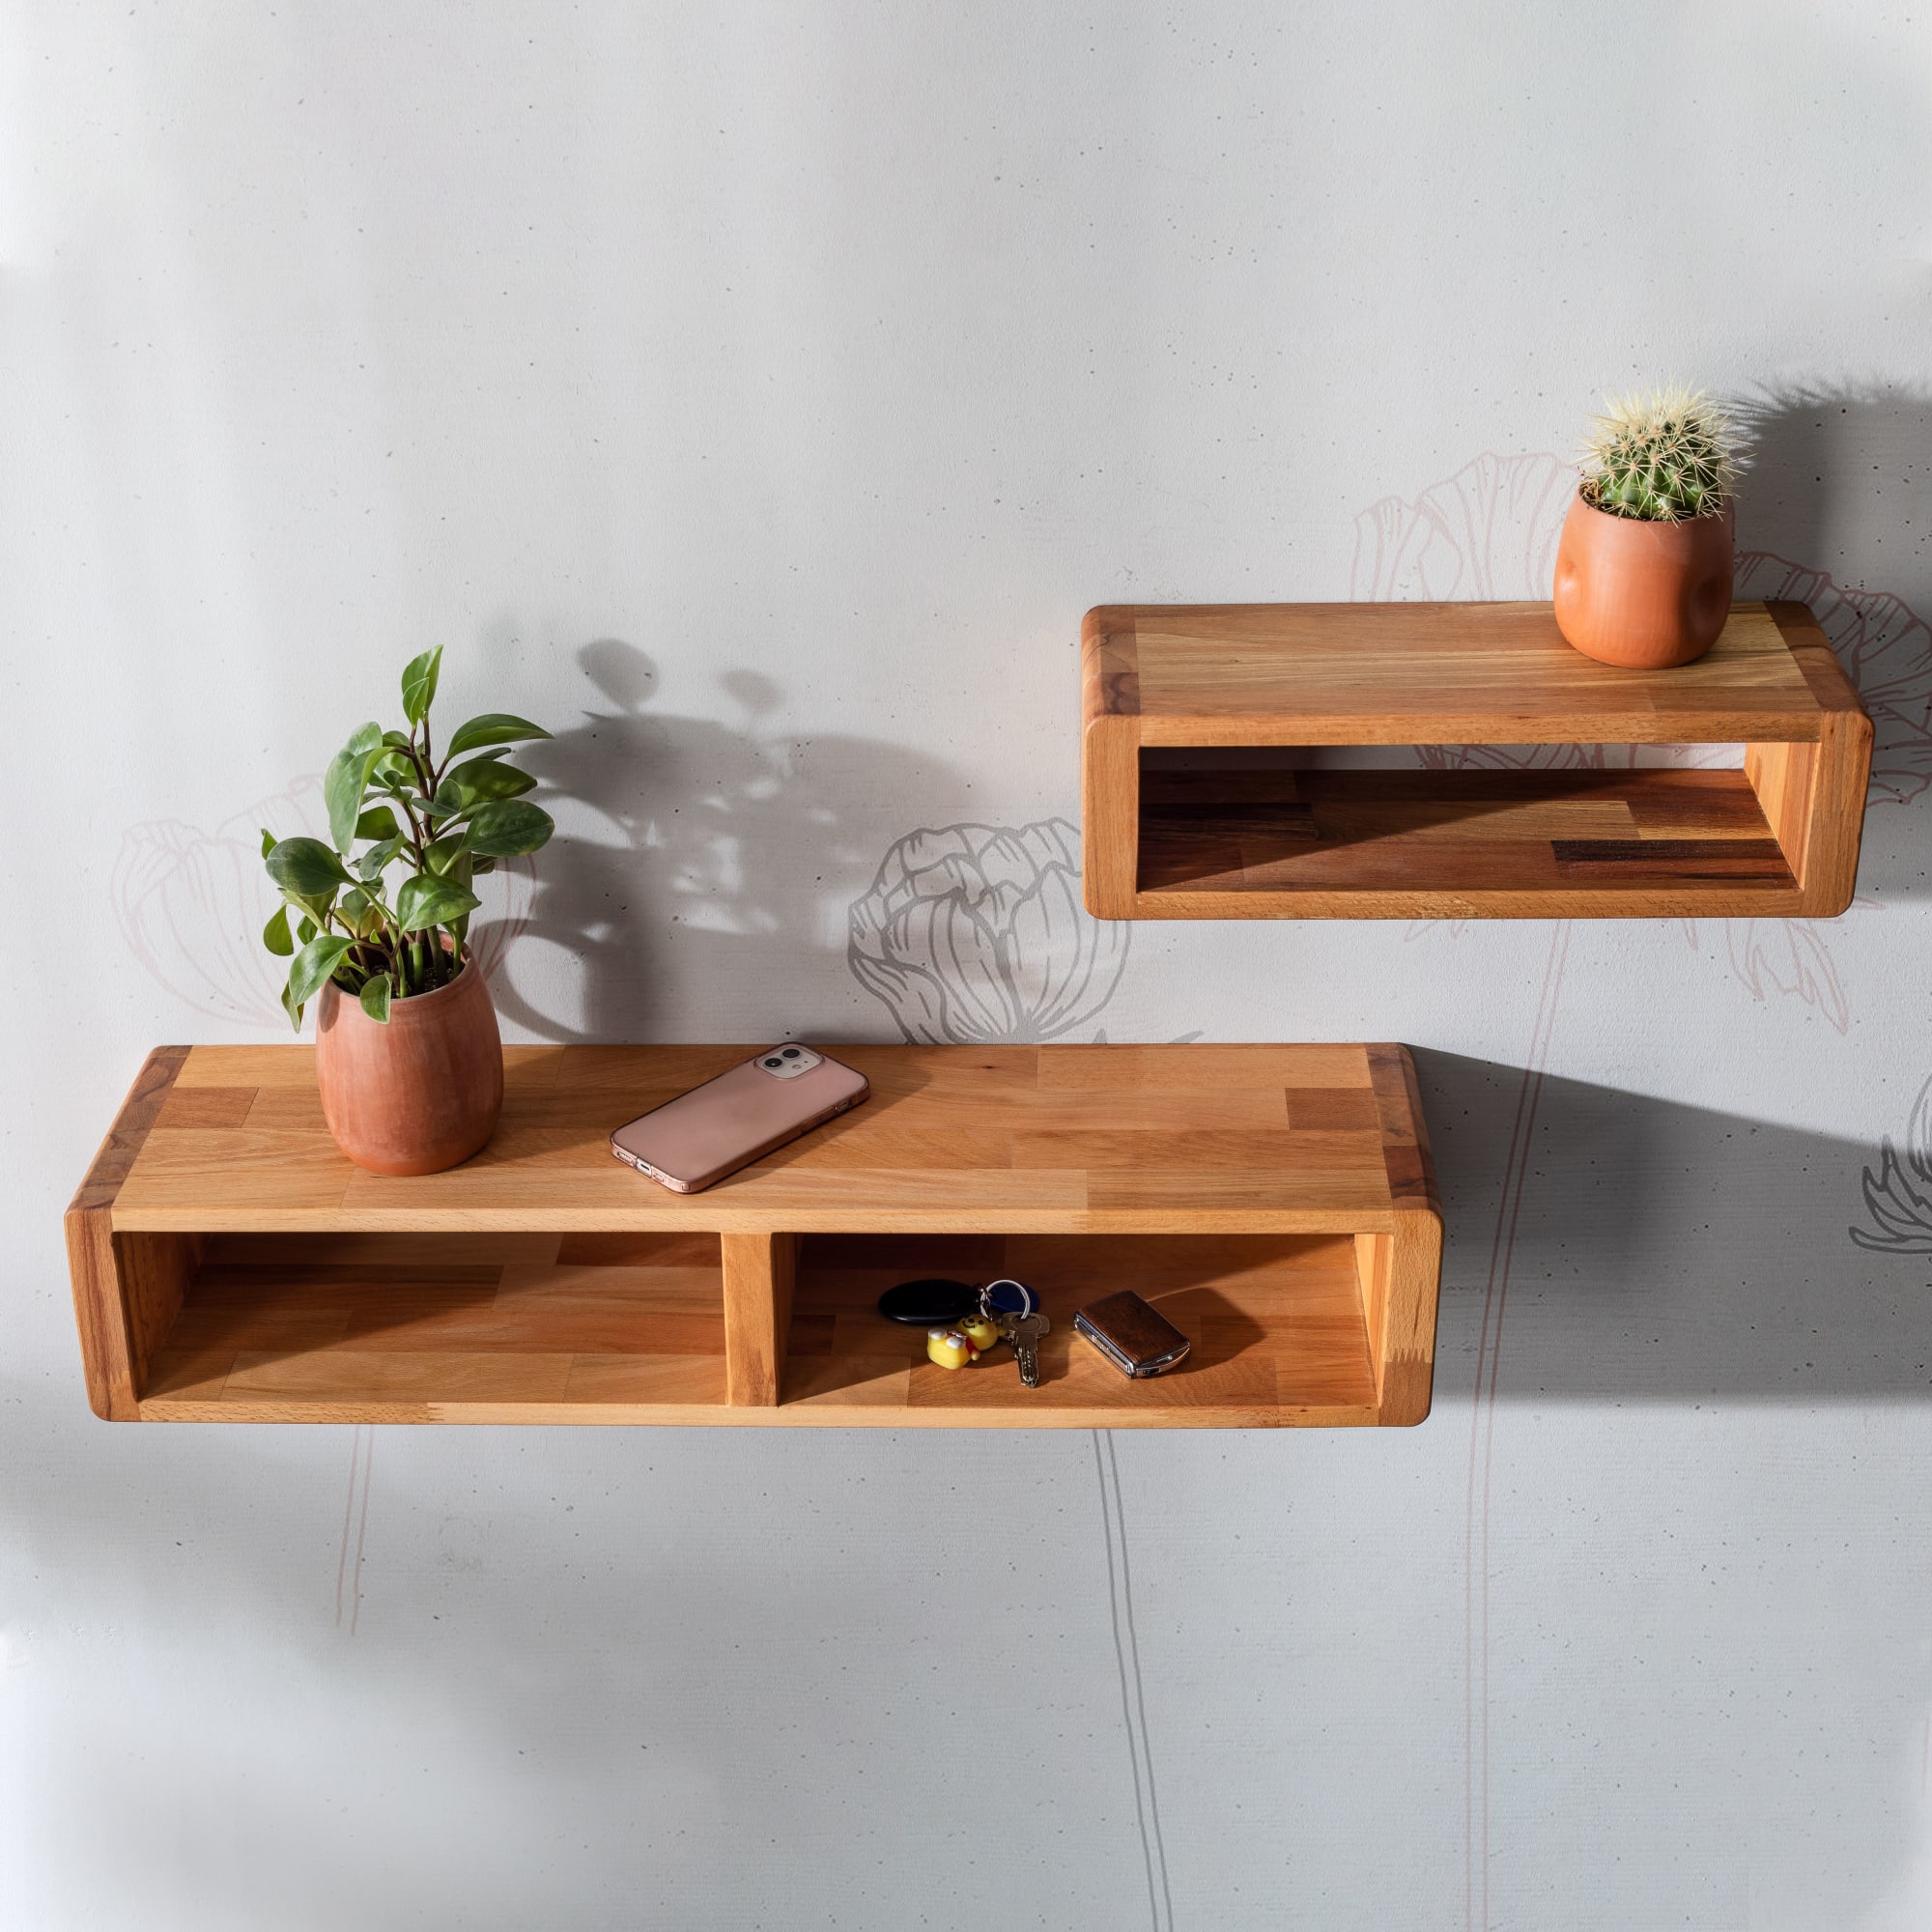 Floating Box Shelf, Wooden Wall Mount Shelves